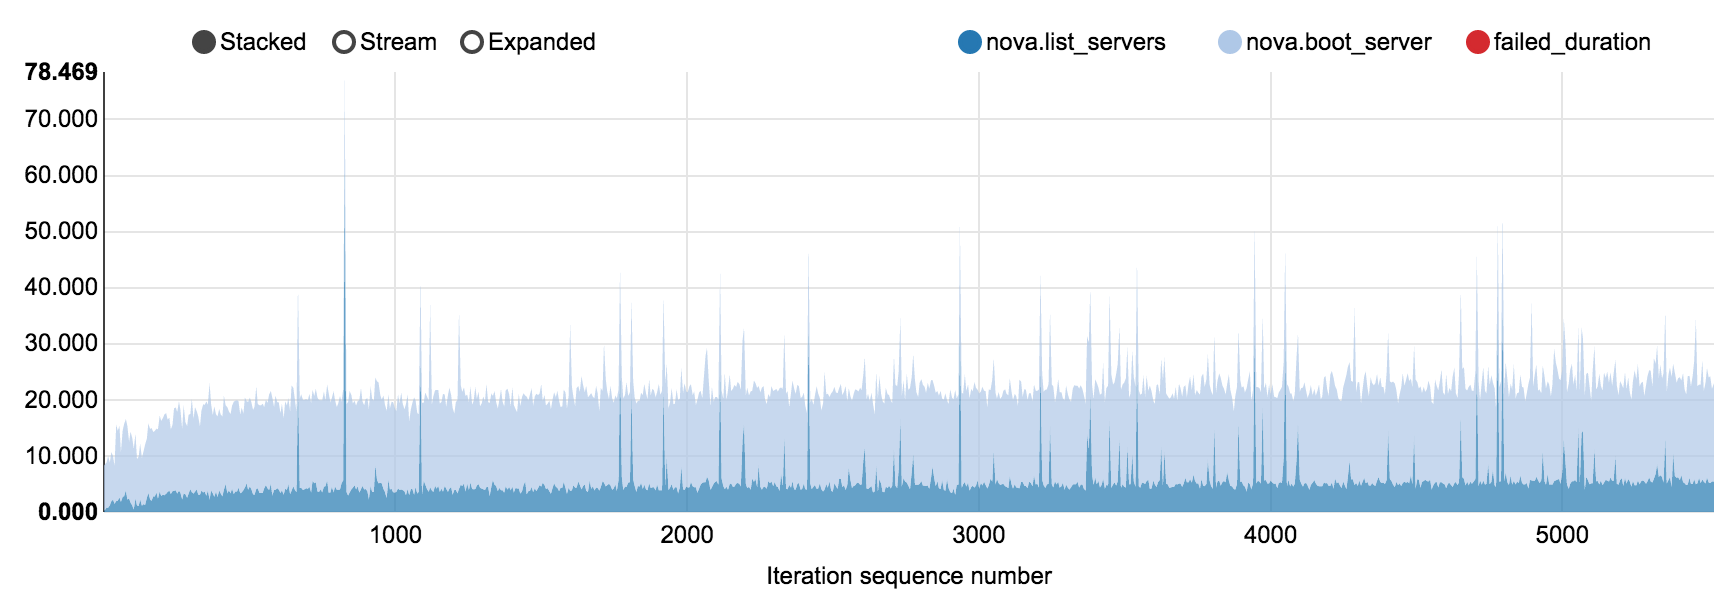 Boot and list servers Rally scenario (150 nodes)